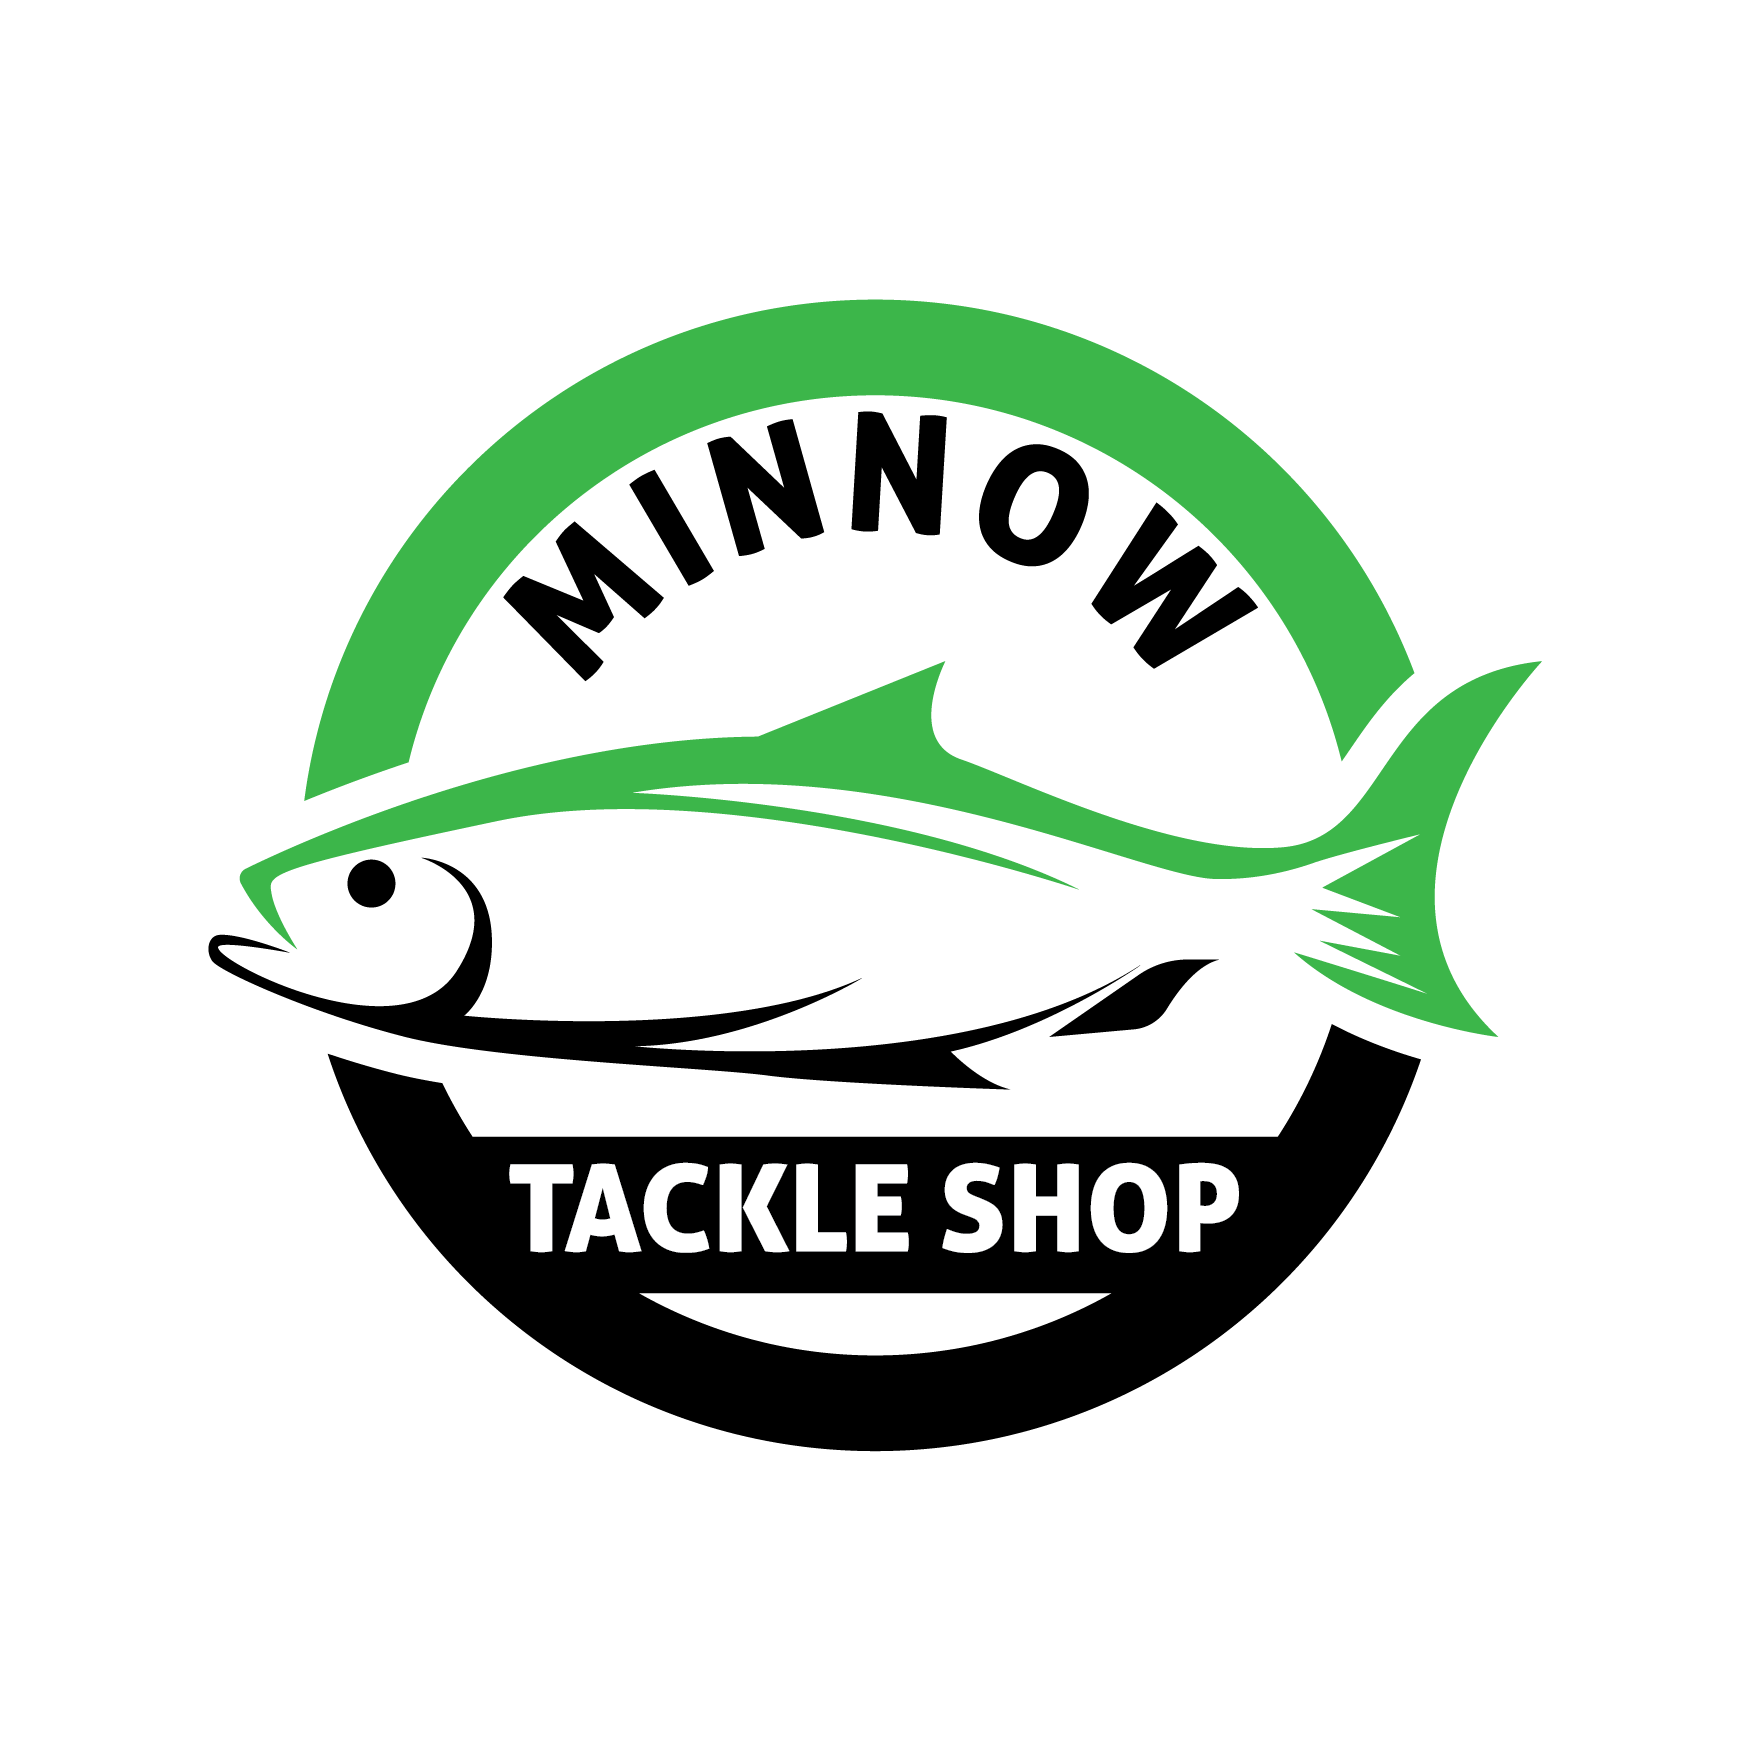 minnow tackle shop logo